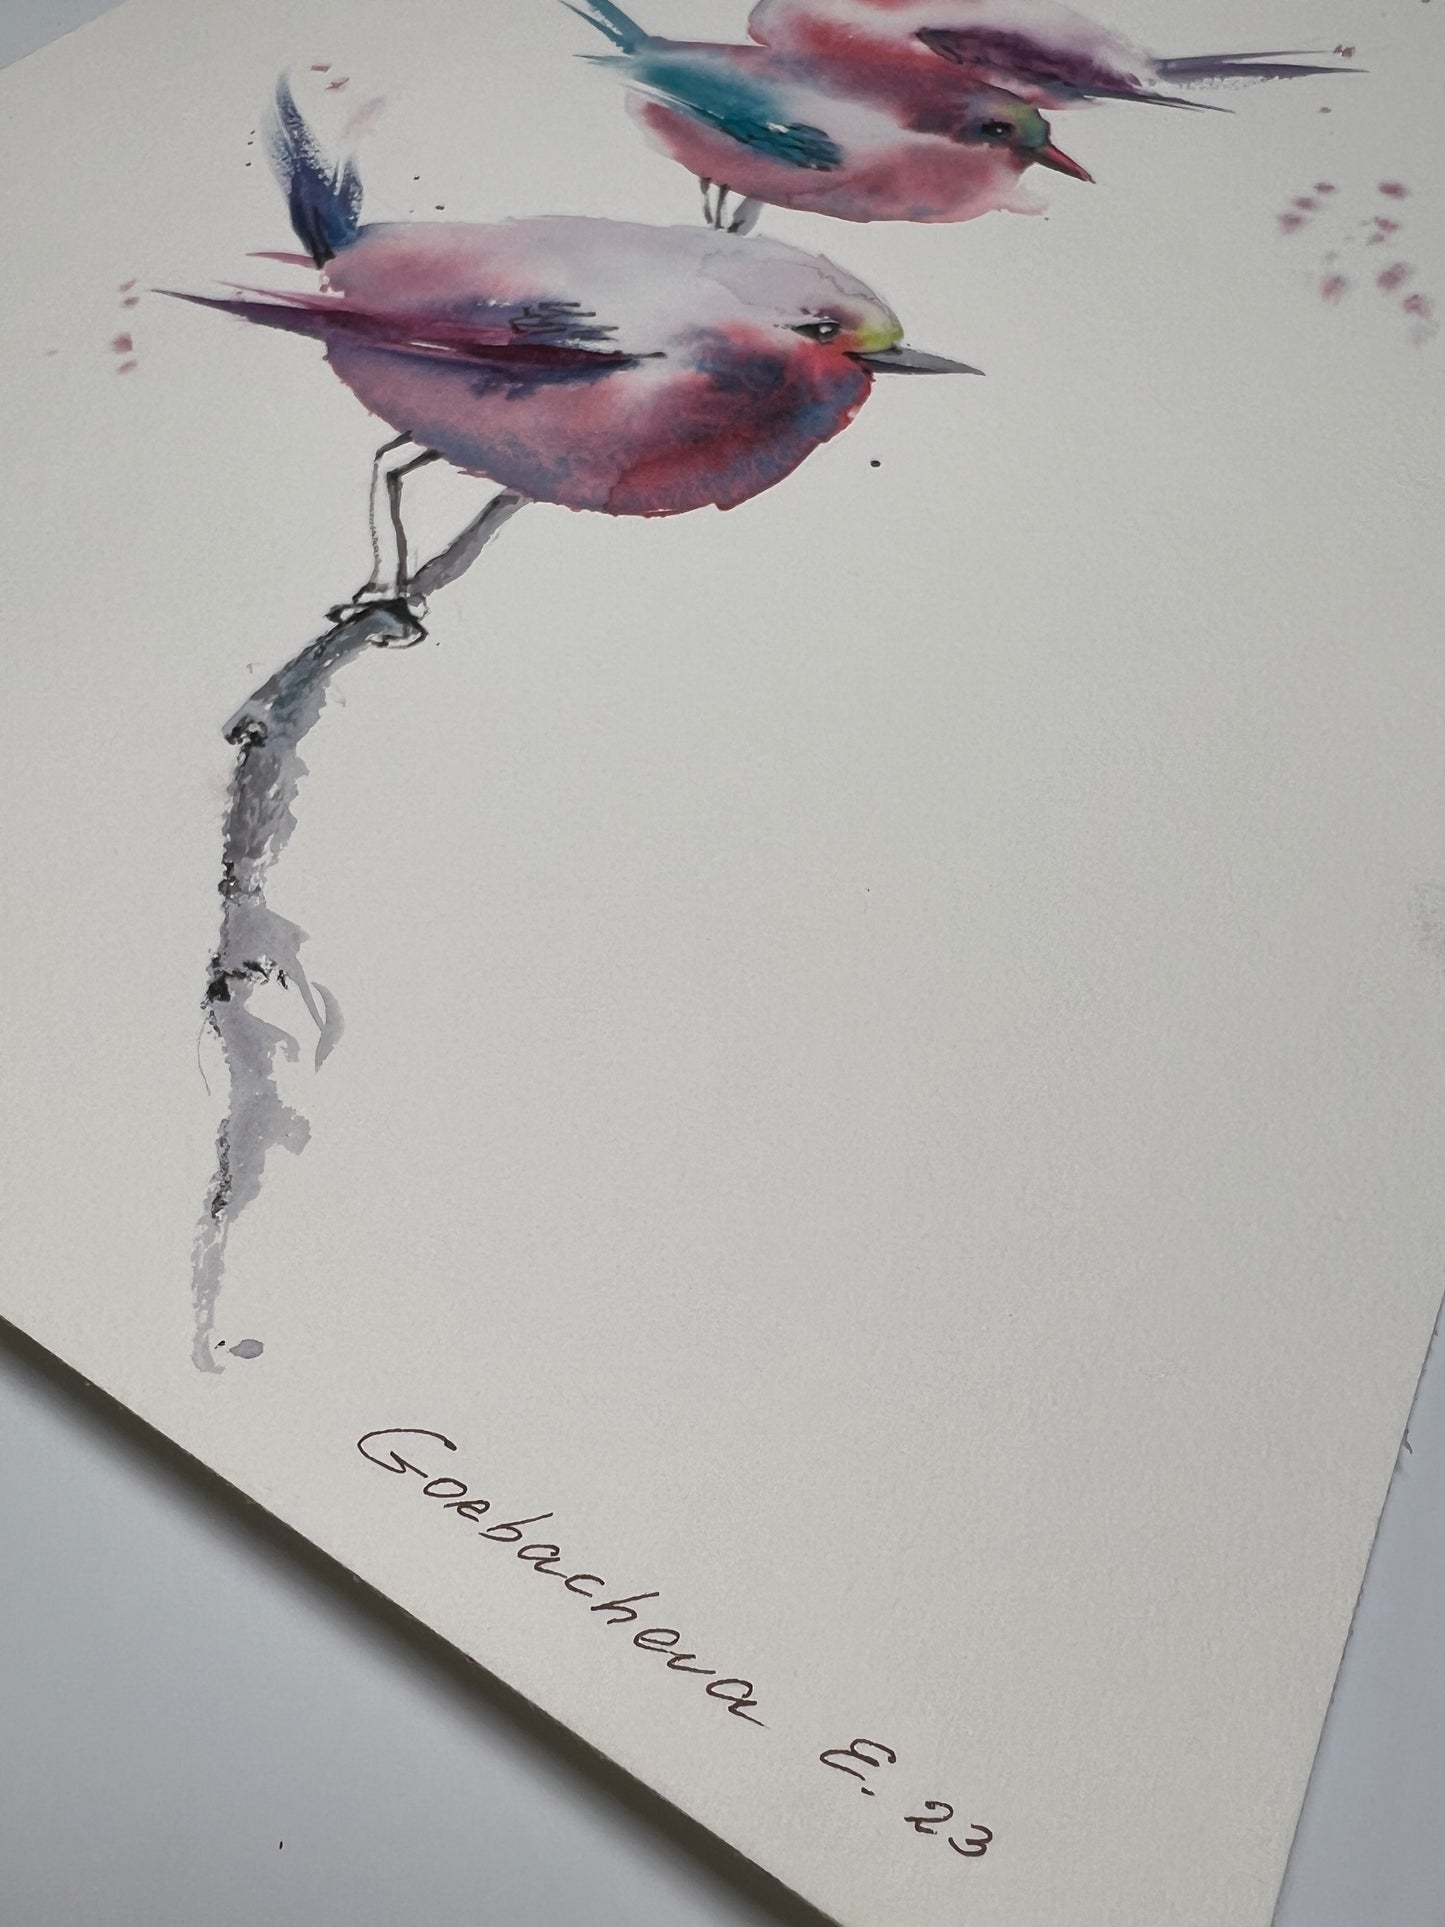 Cute Bird Watercolor Painting, Original Artwork, Gift For Bird Lover, Pink Neutral Art Illustration